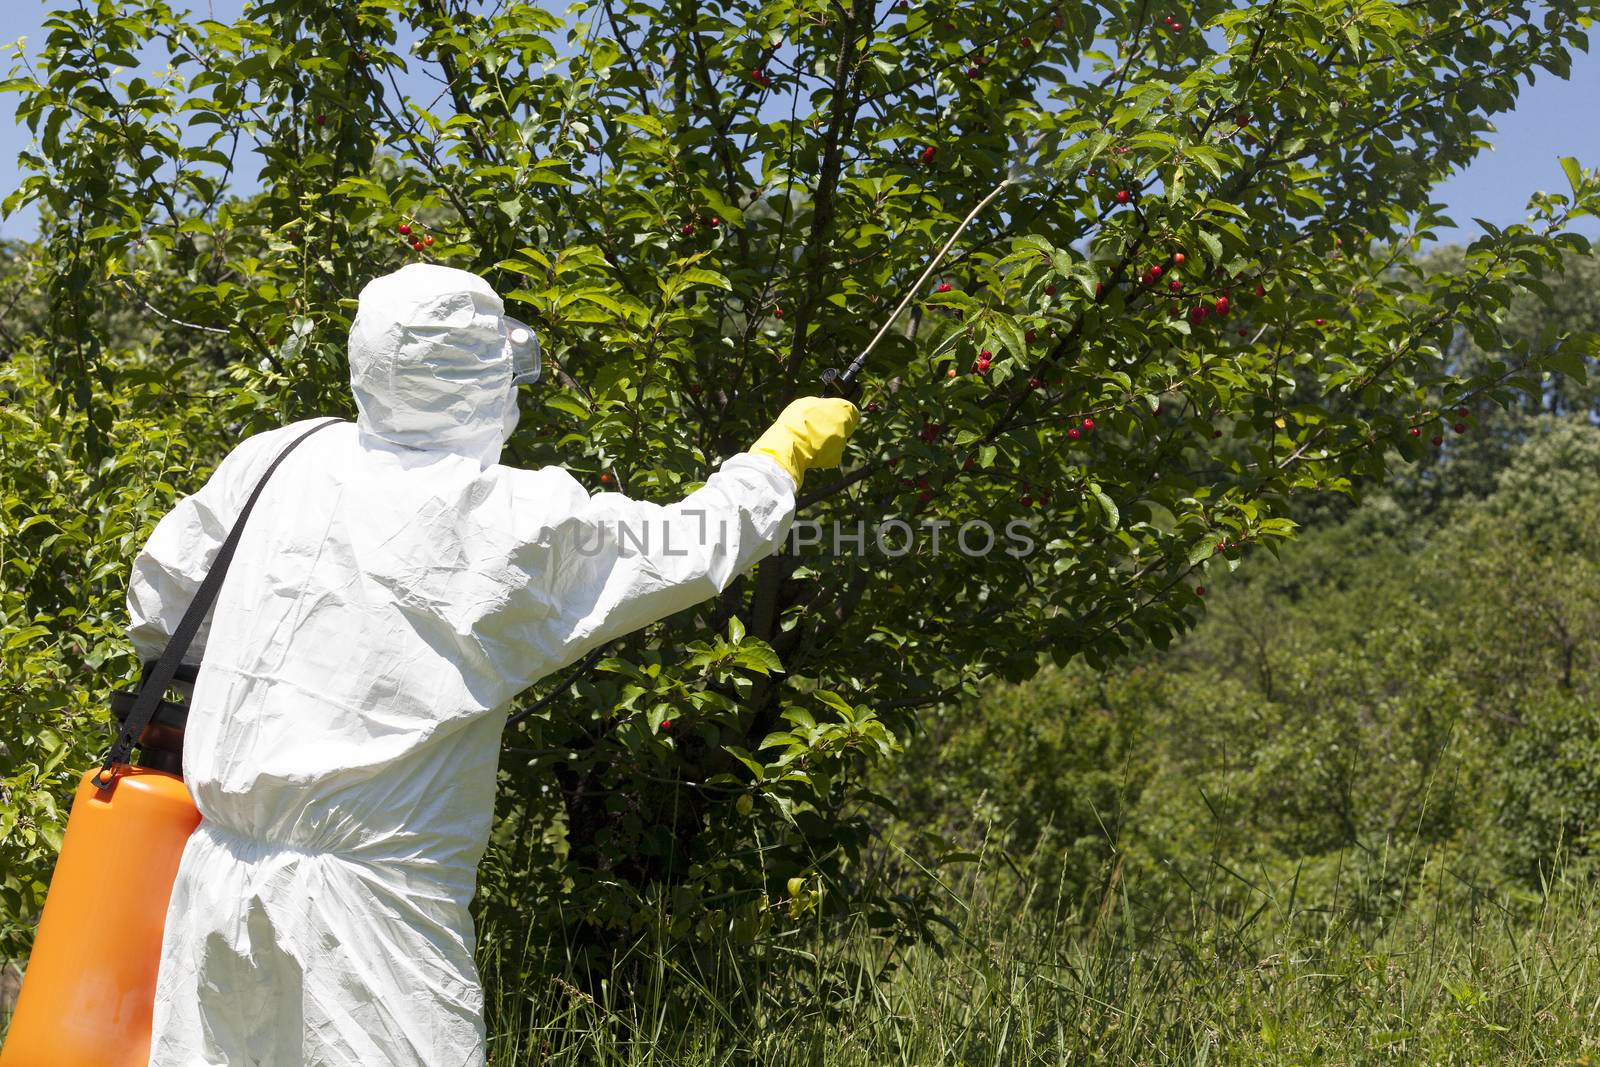 Farmer spraying toxic pesticides. Non-organic fruit.